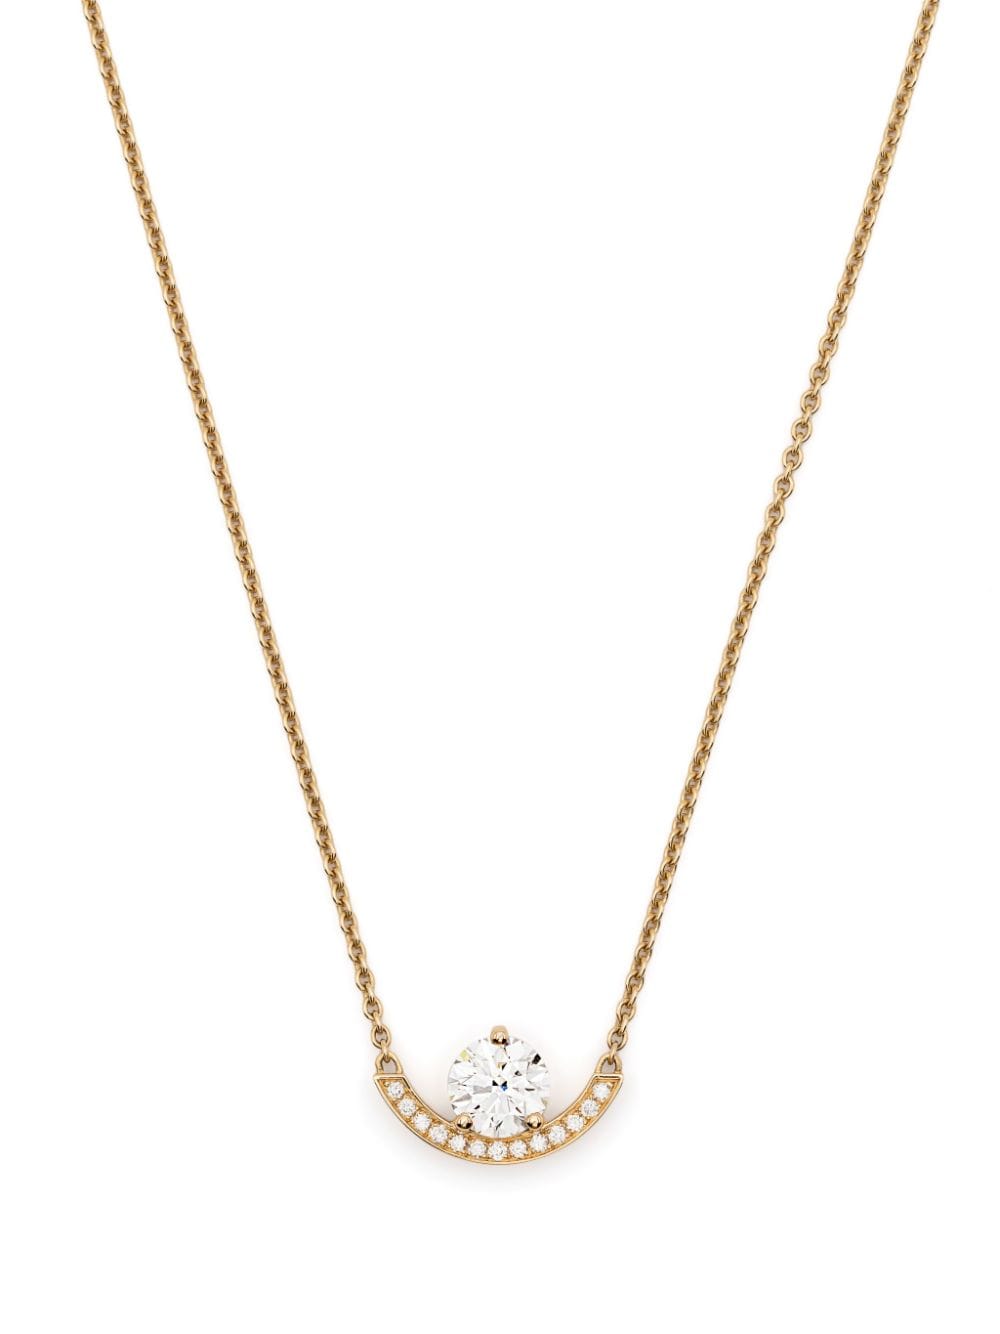 Loyal.e Paris 18kt Recycled Yellow Gold Intrépide Grand Arc Diamond Necklace